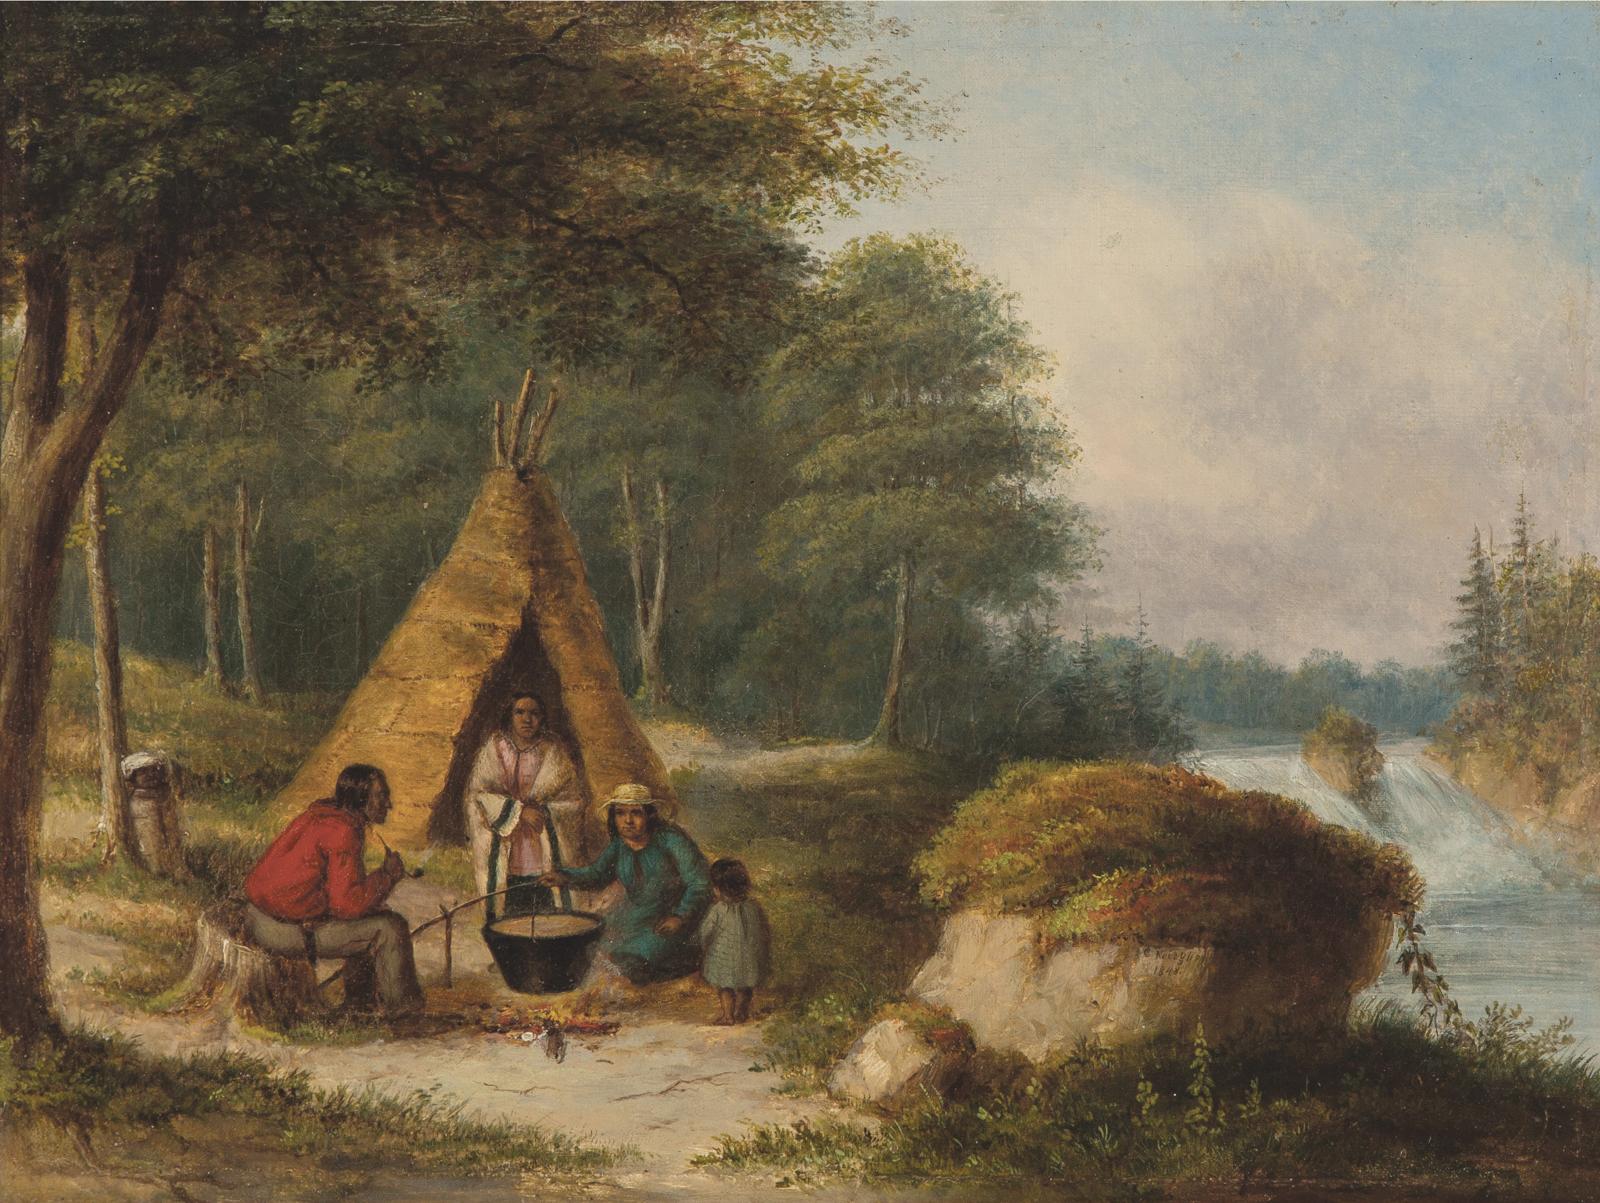 Cornelius David Krieghoff (1815-1872) - Indian Encampment, Early Summer, 1848